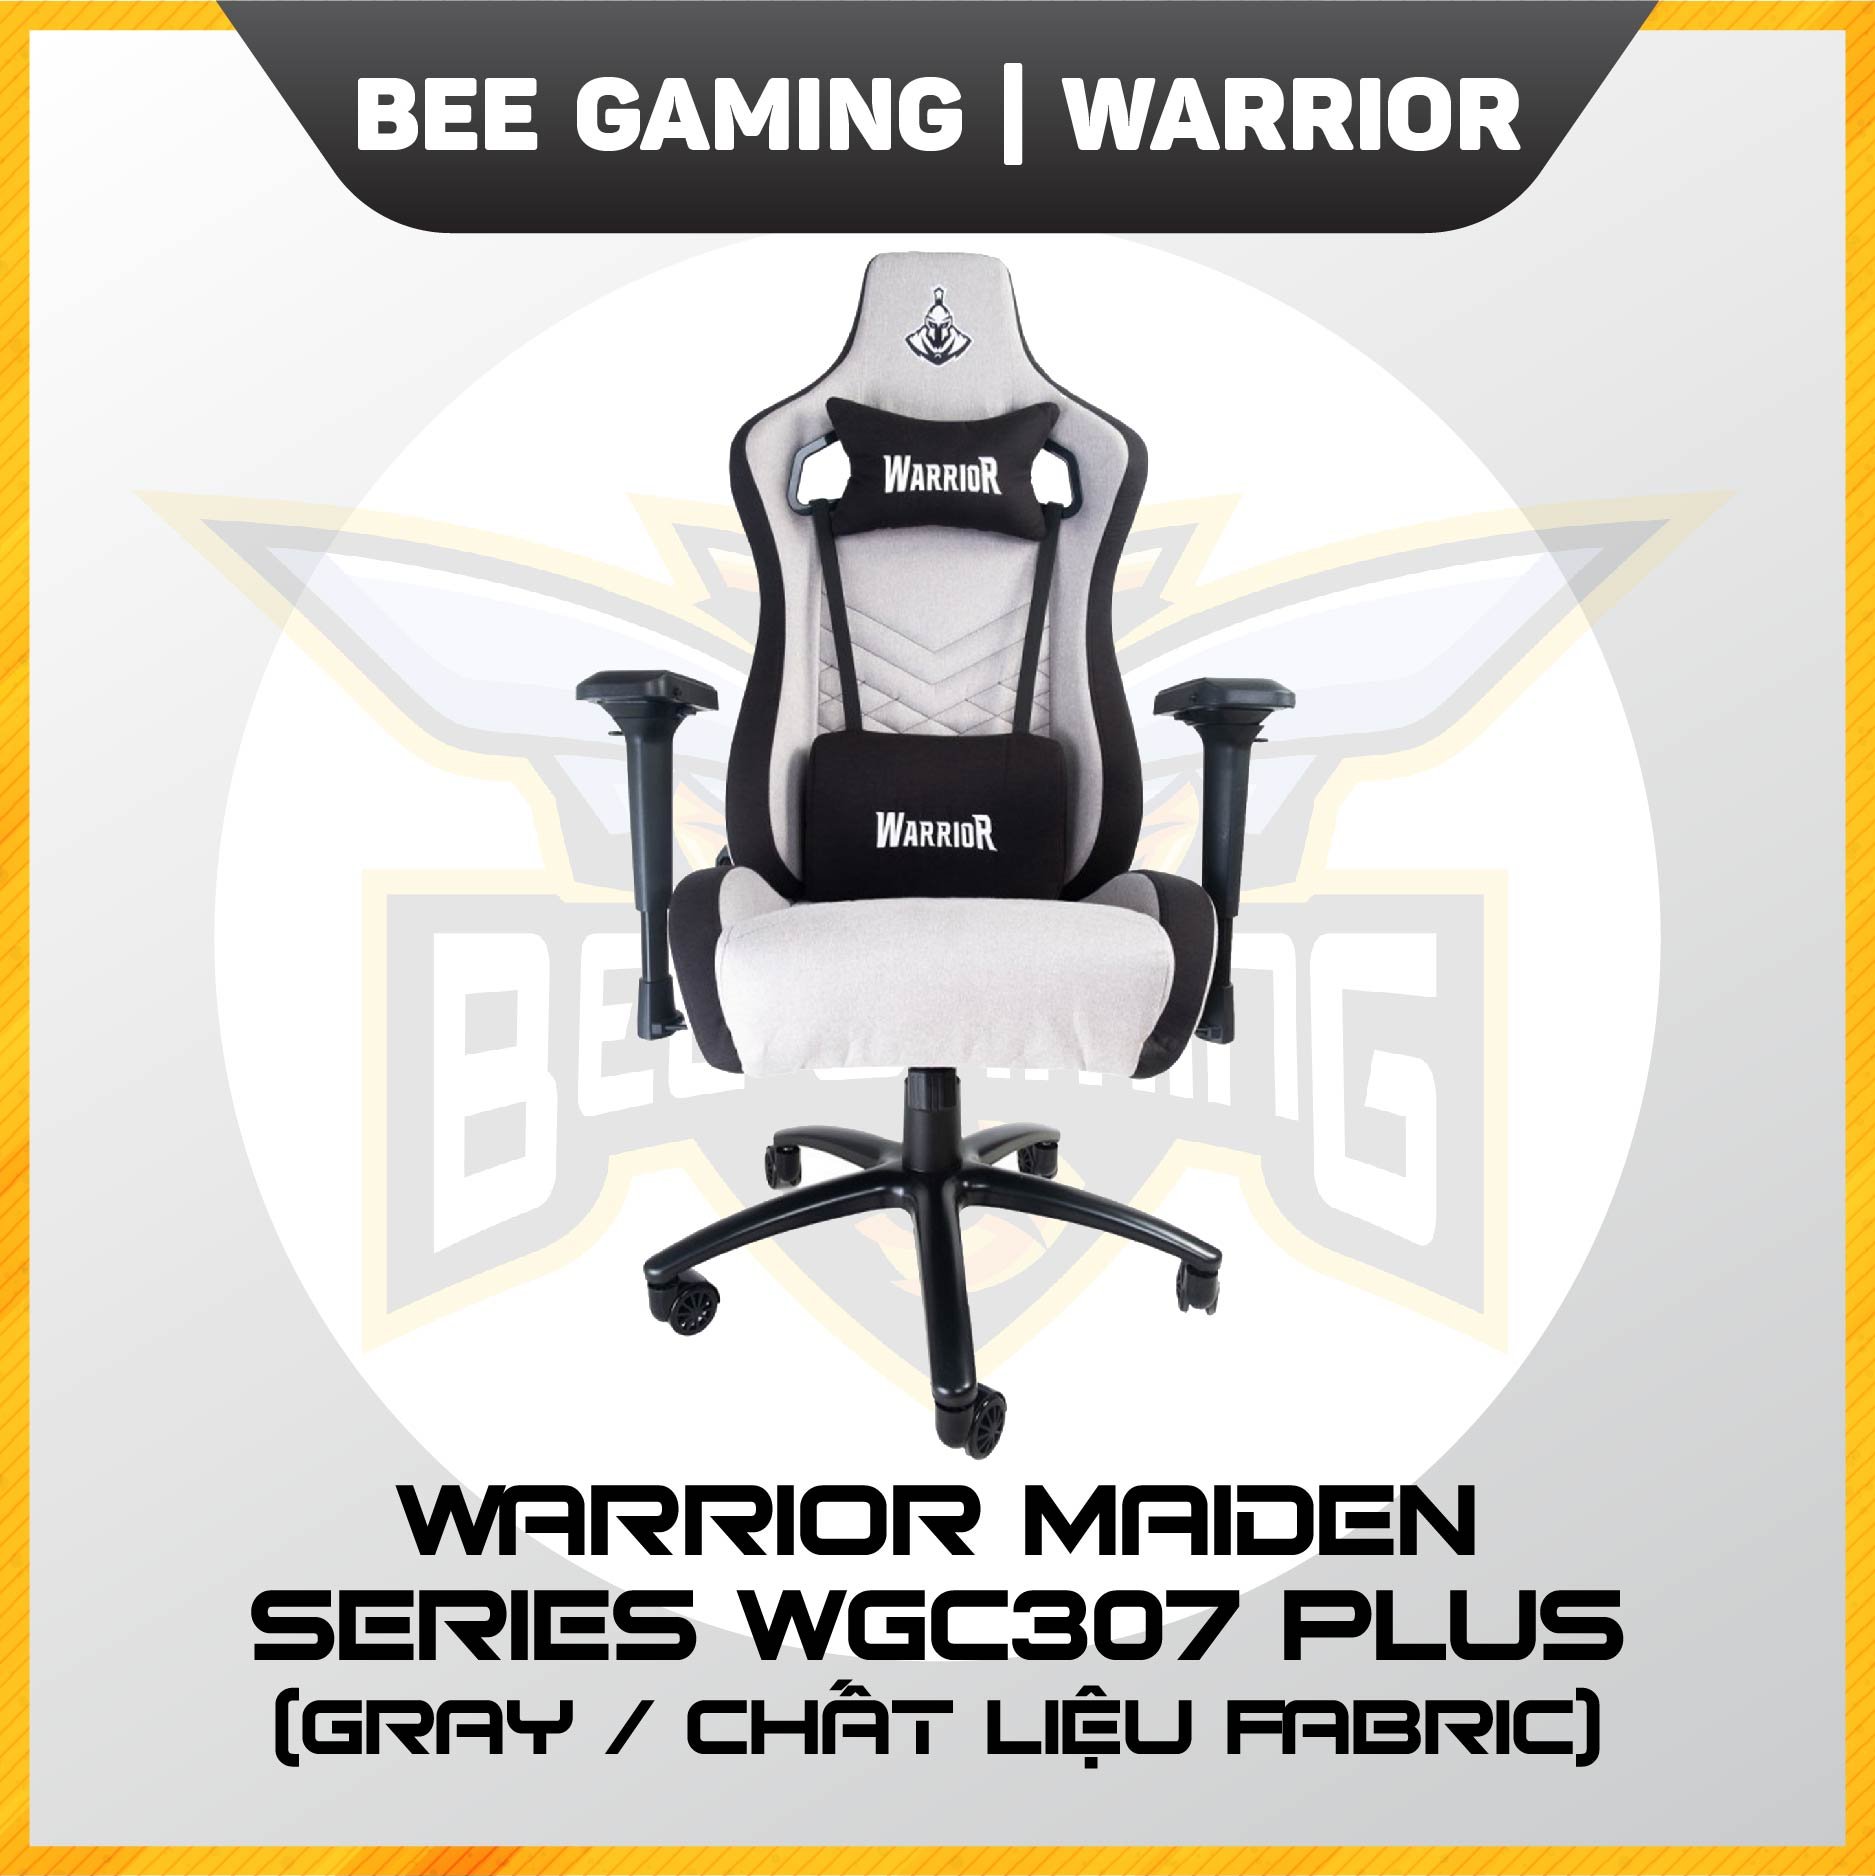 ghe-gaming-warrior-wgc307-plus-beegaming-11